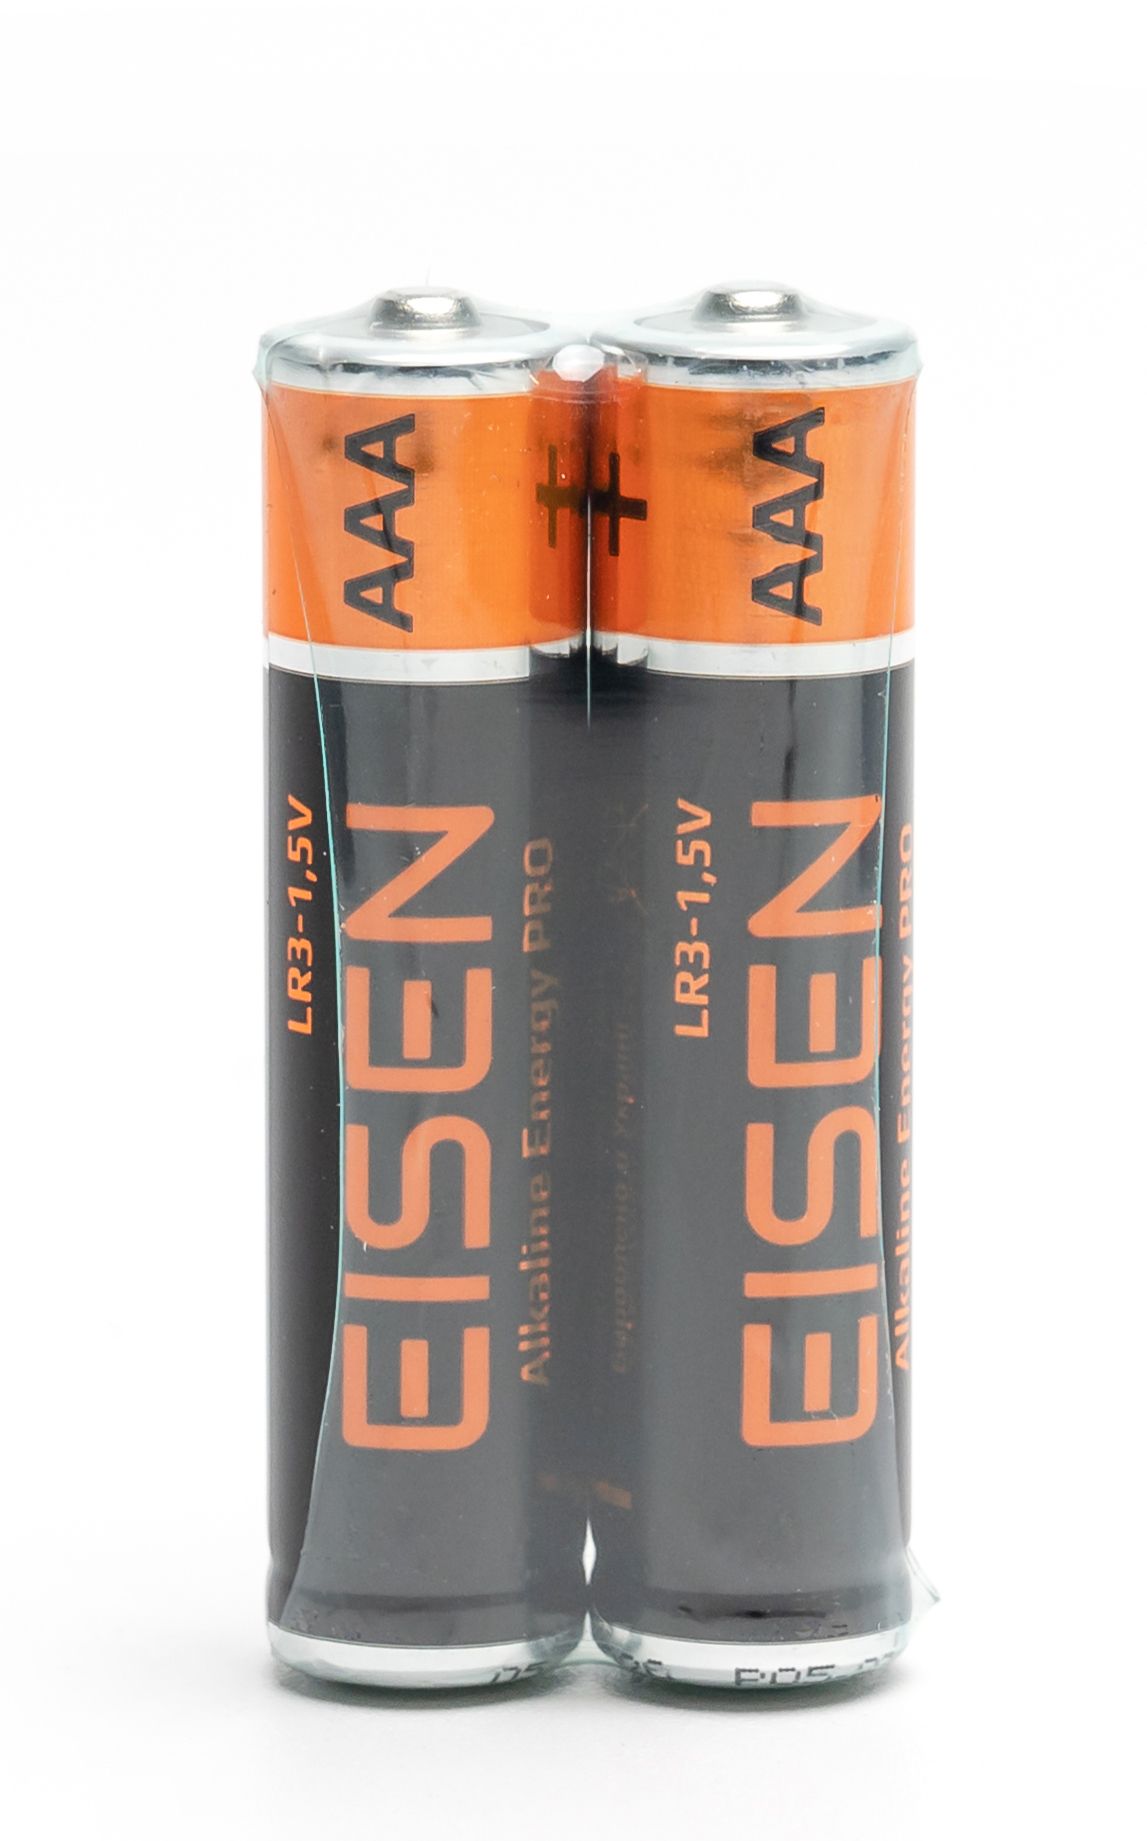 Батарейка Eisen Energy Alkaline PRO LR03 (AAA) спайка 2шт. в Днепре